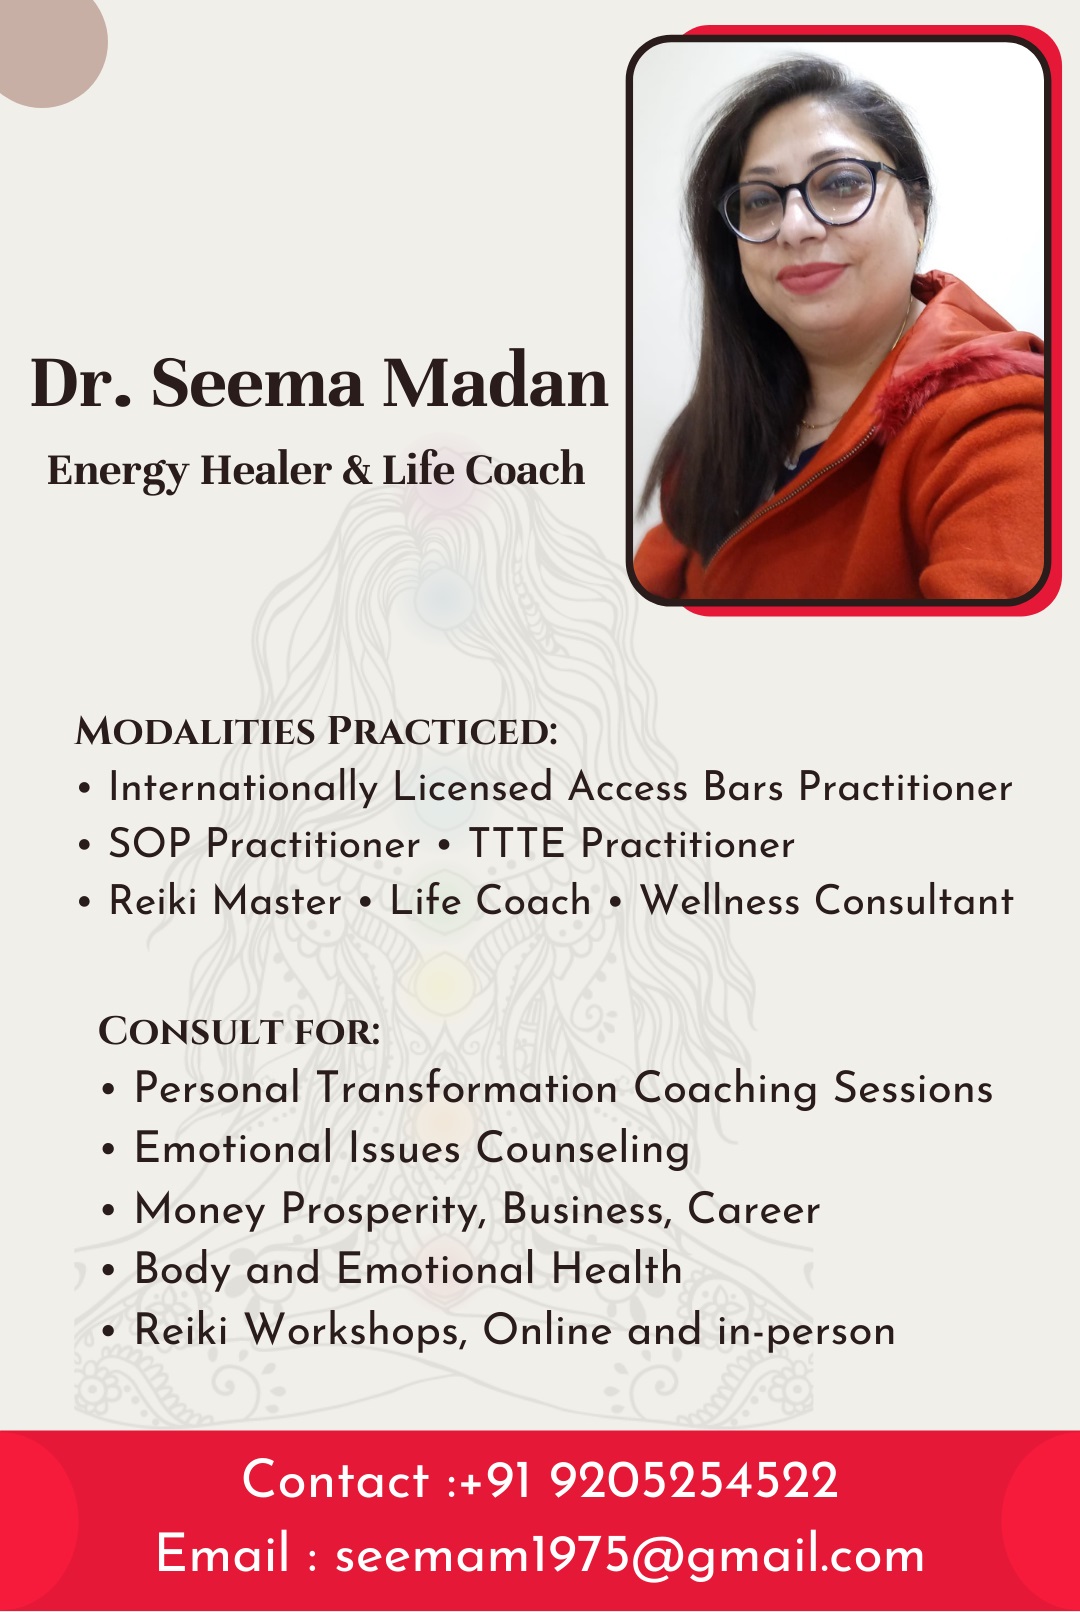 Dr. Seema Madan - Energy Healer & Life Coach - Raipur